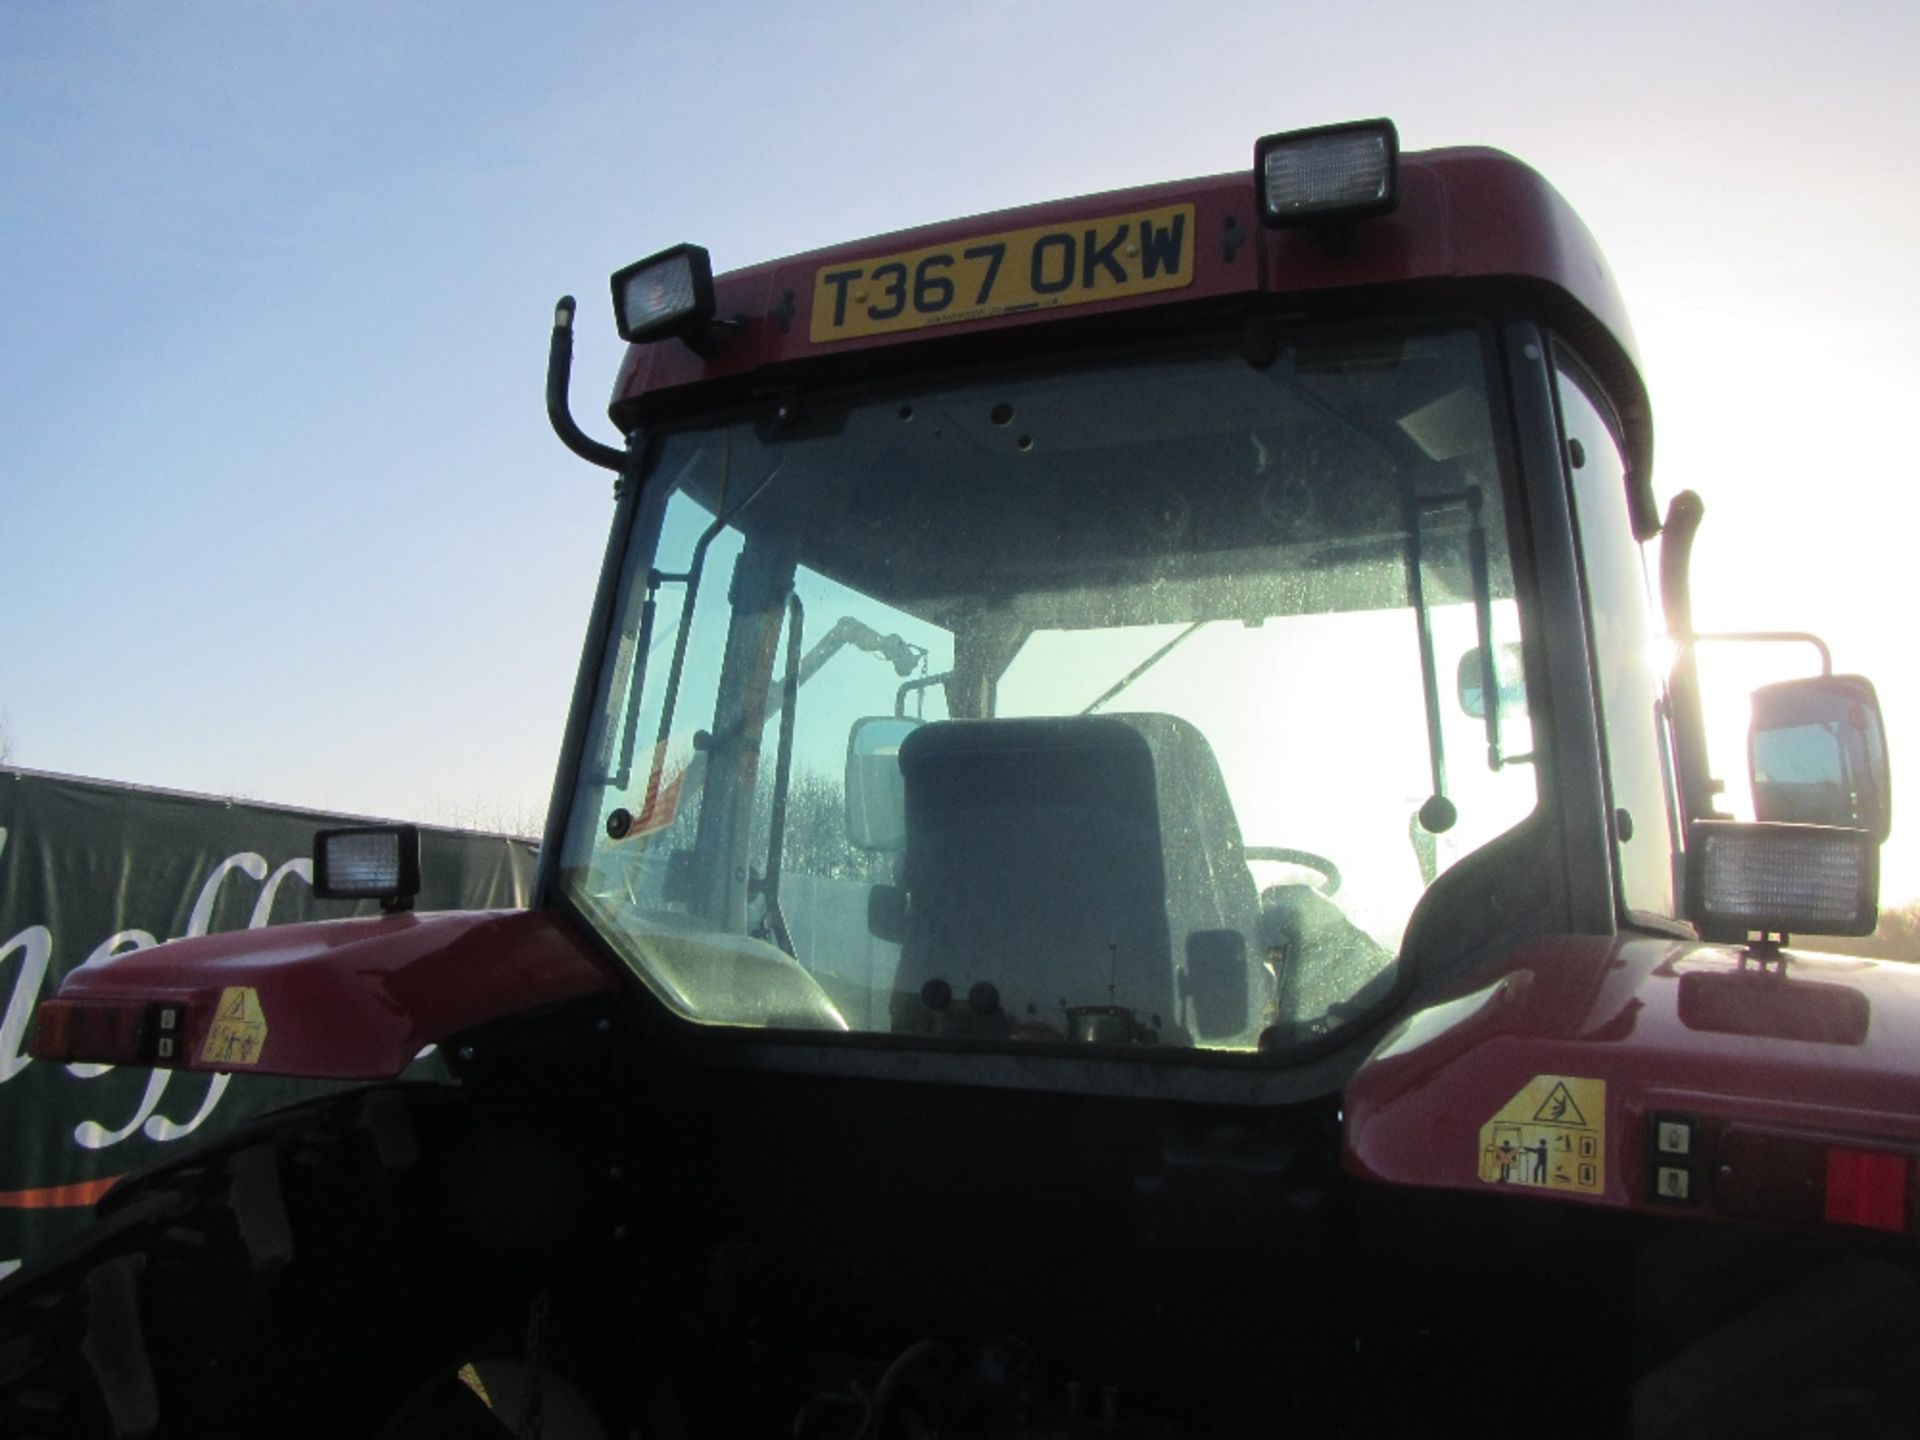 Case International MX90 Tractor c/w Quicke 760 Loader Reg No T367 OKW - Image 8 of 16